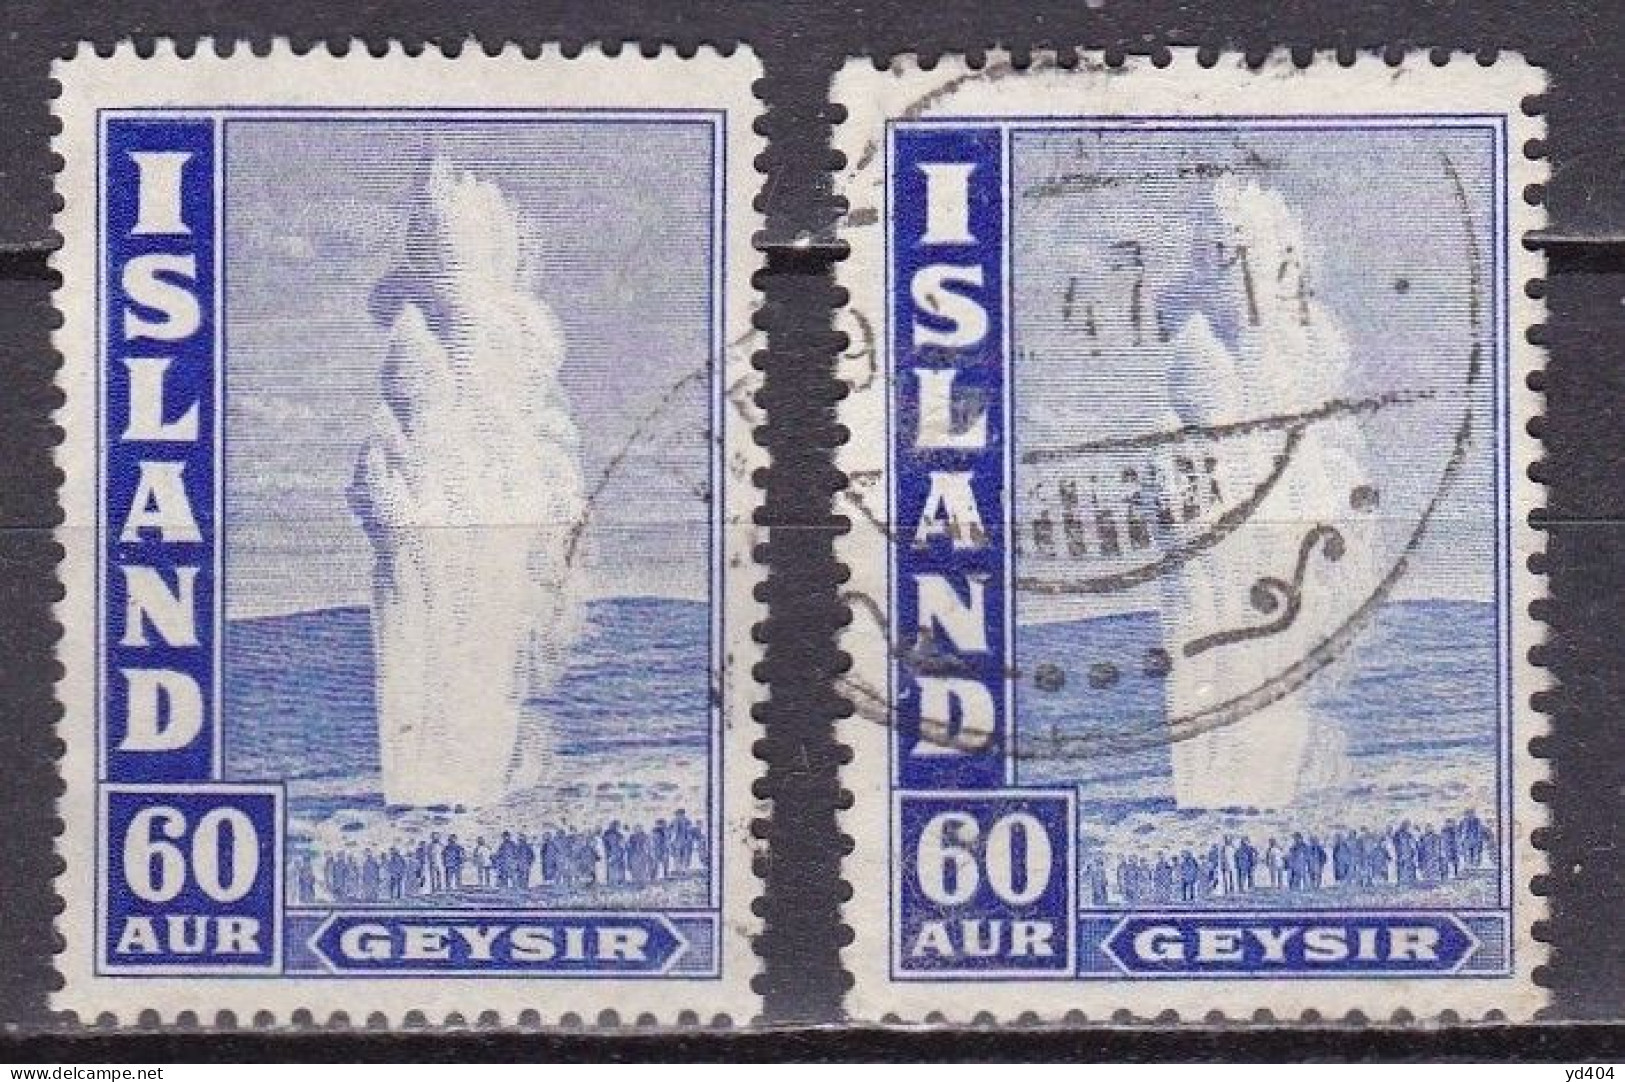 IS036C – ISLANDE – ICELAND – 1943-47 – THE GREAT GEYSER – SC # 208A/Ac USED 12 € - Usati